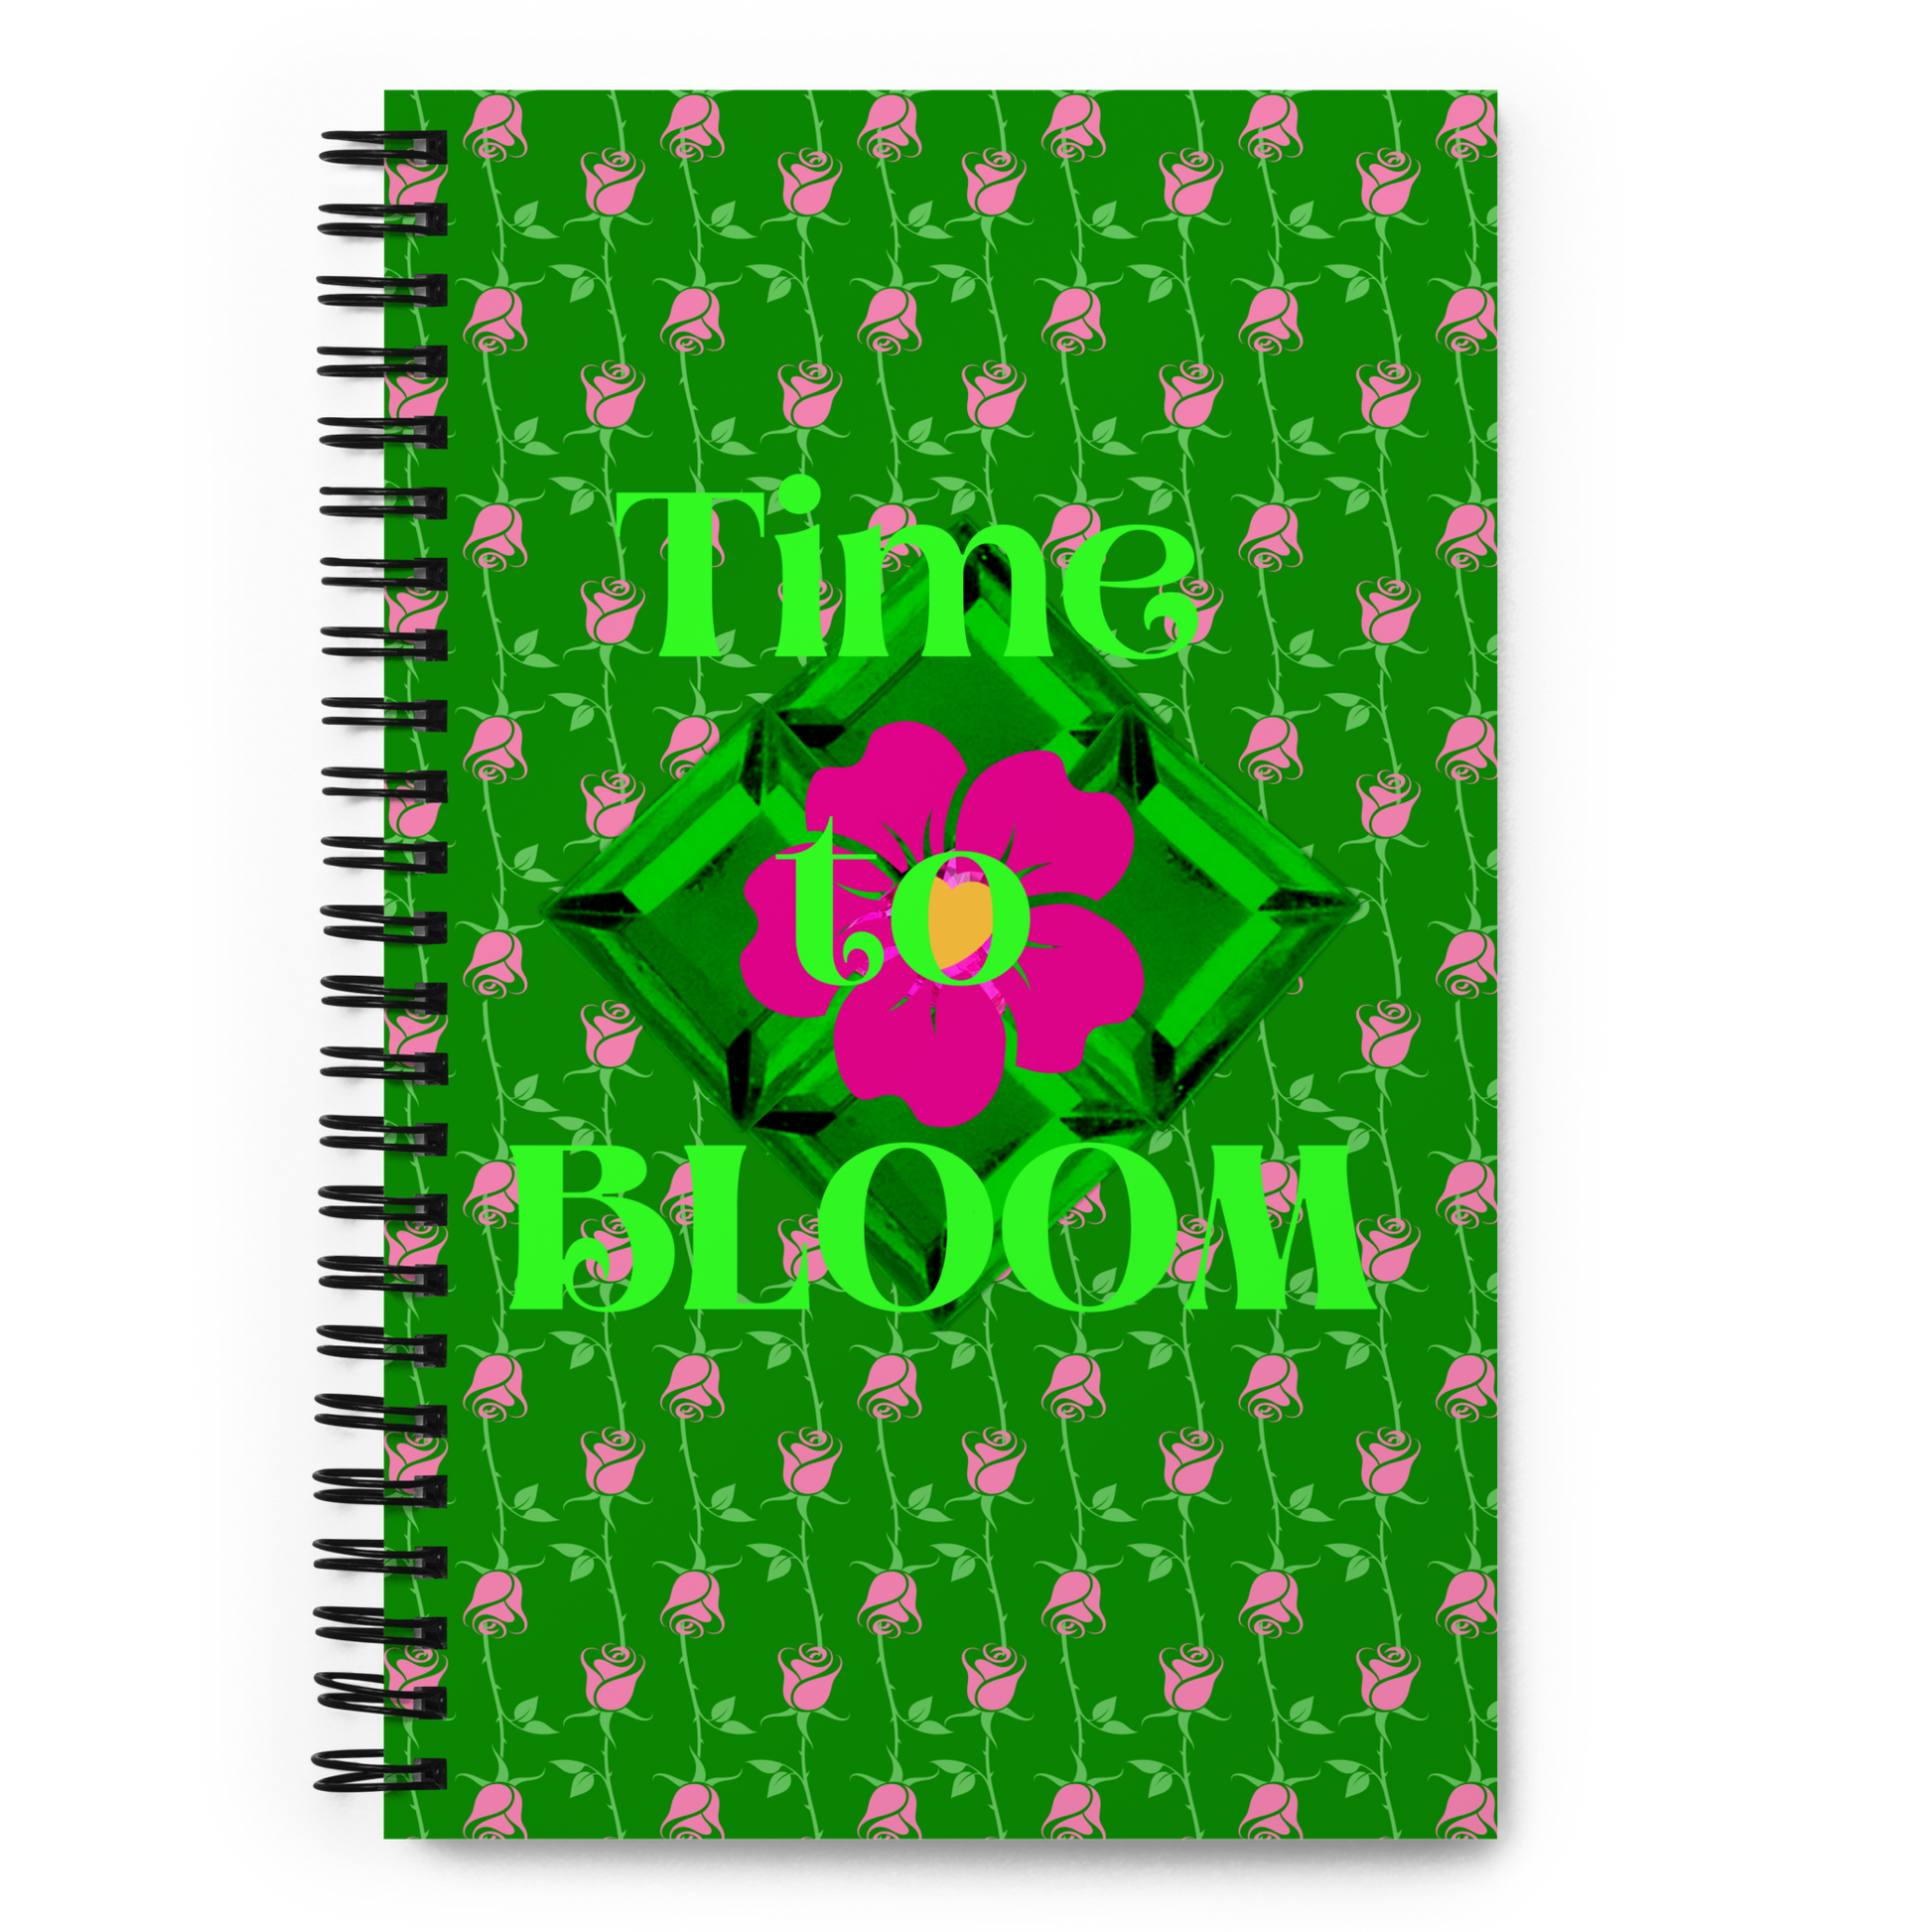 Time to BLOOM Spiral notebook - Darlin Primrose